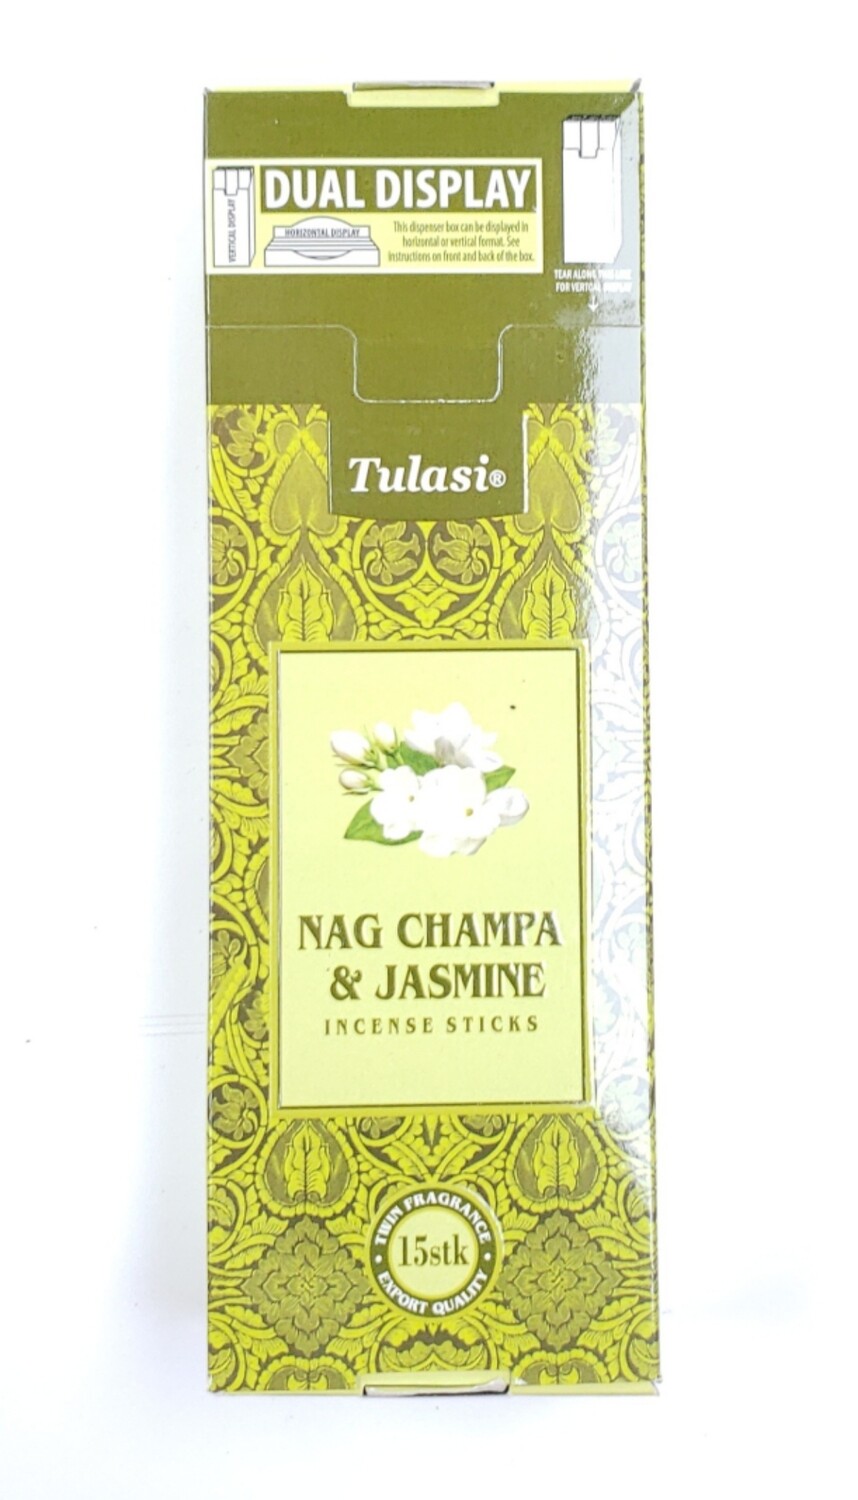 Tulasi: Nagchampa & jasmine Stick Incense Box (6 Unit 15 Sticks each)